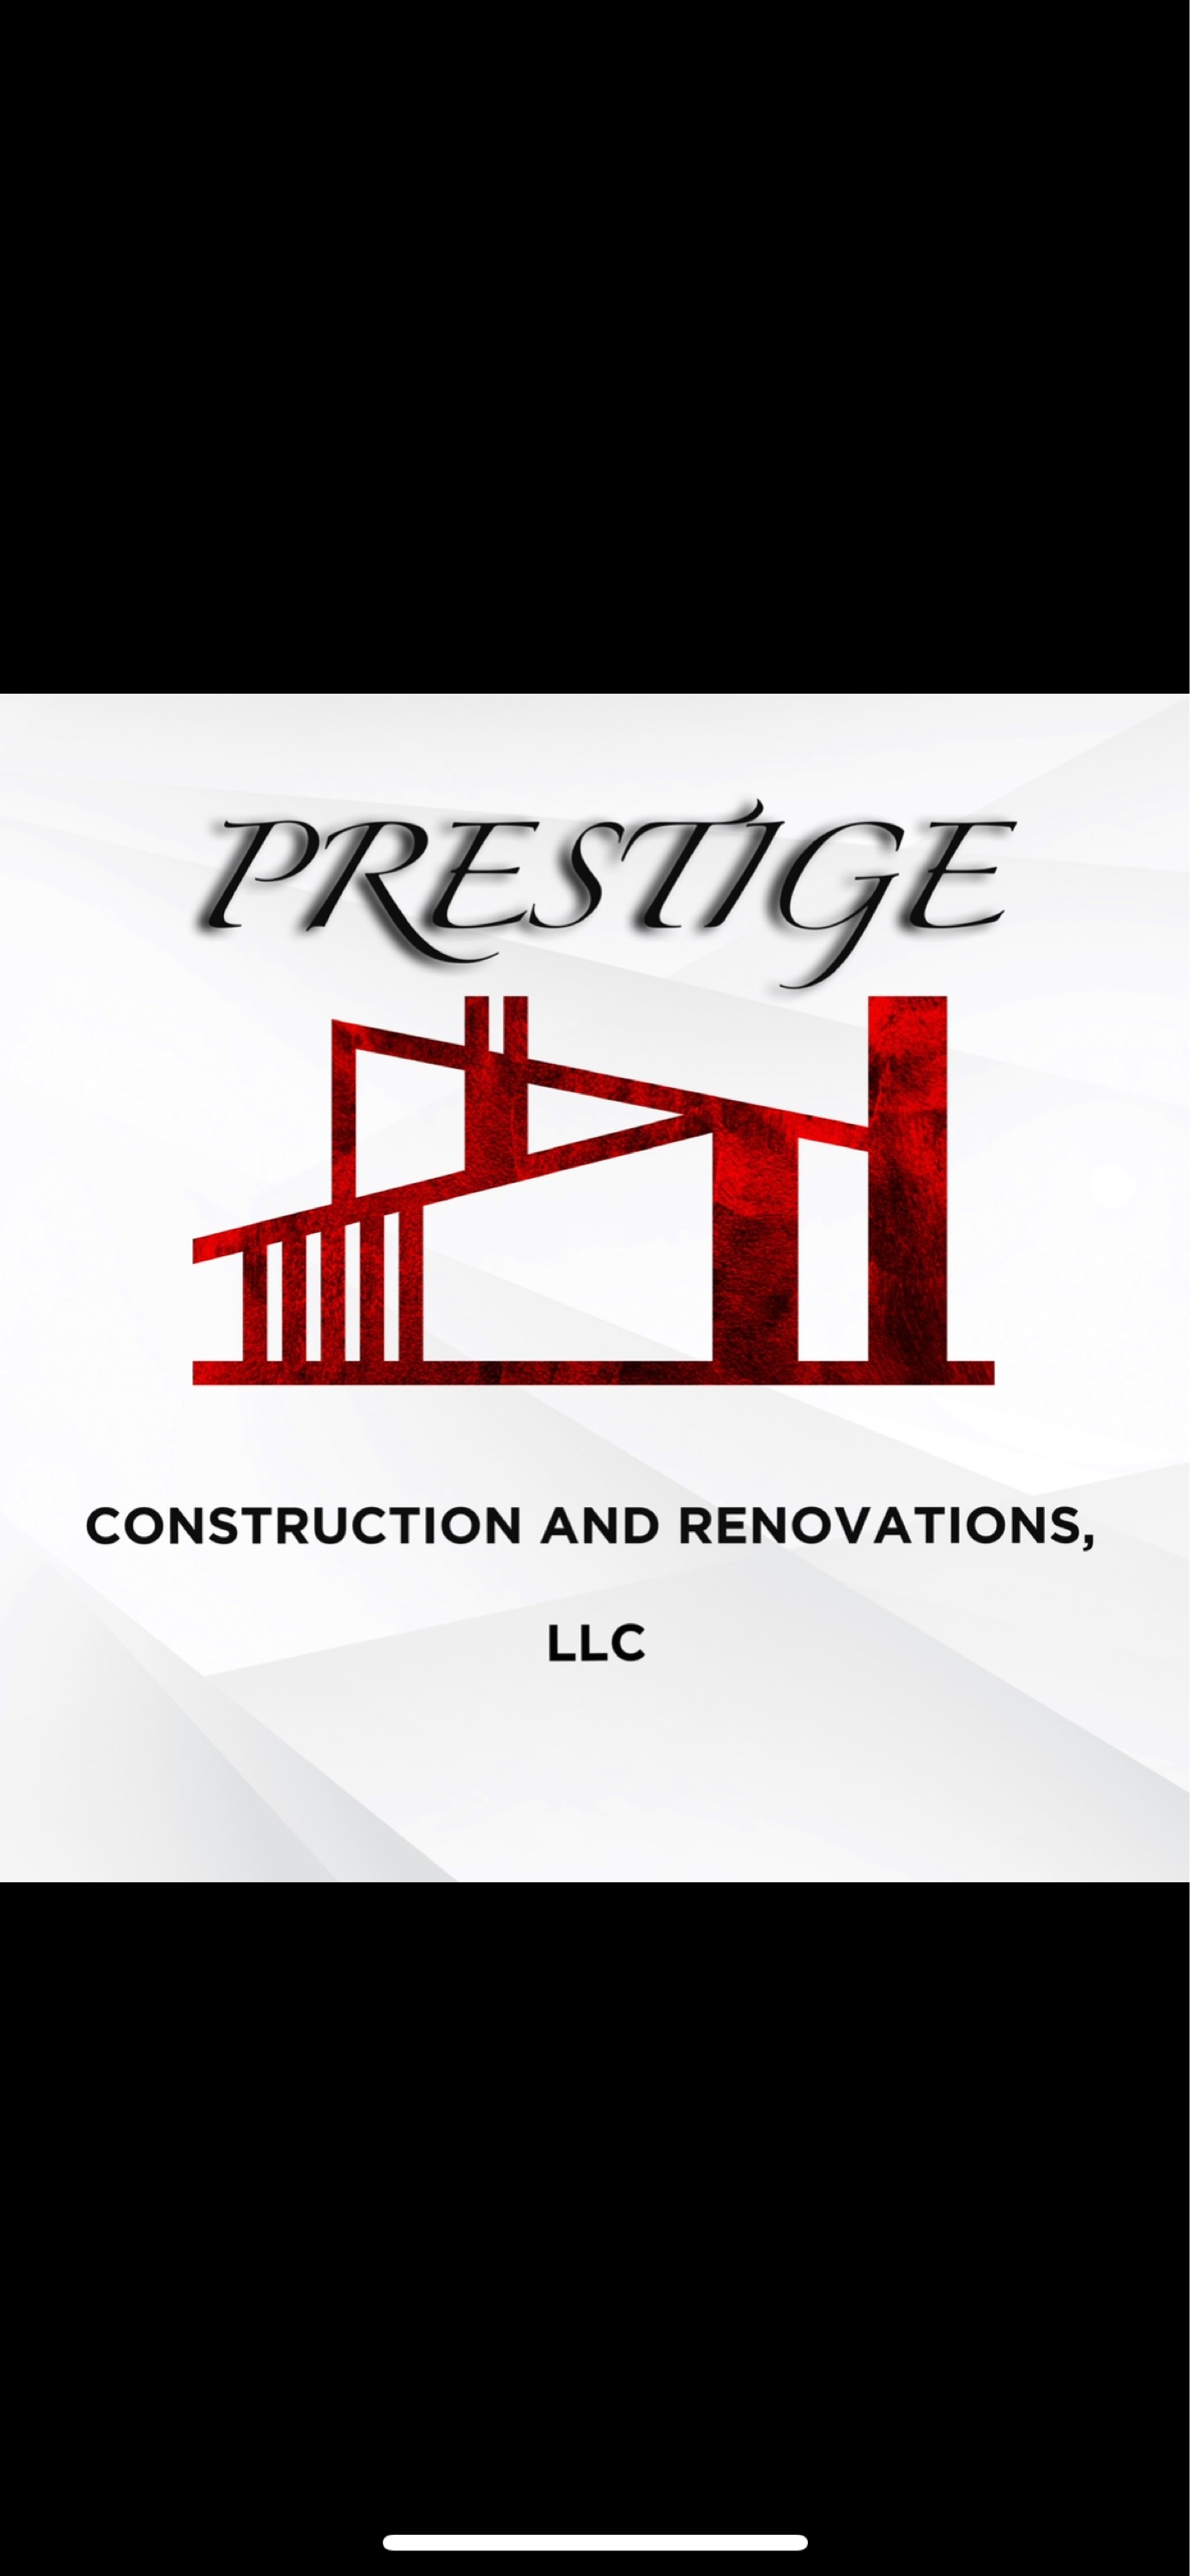 Prestige Construction and Renovations Logo